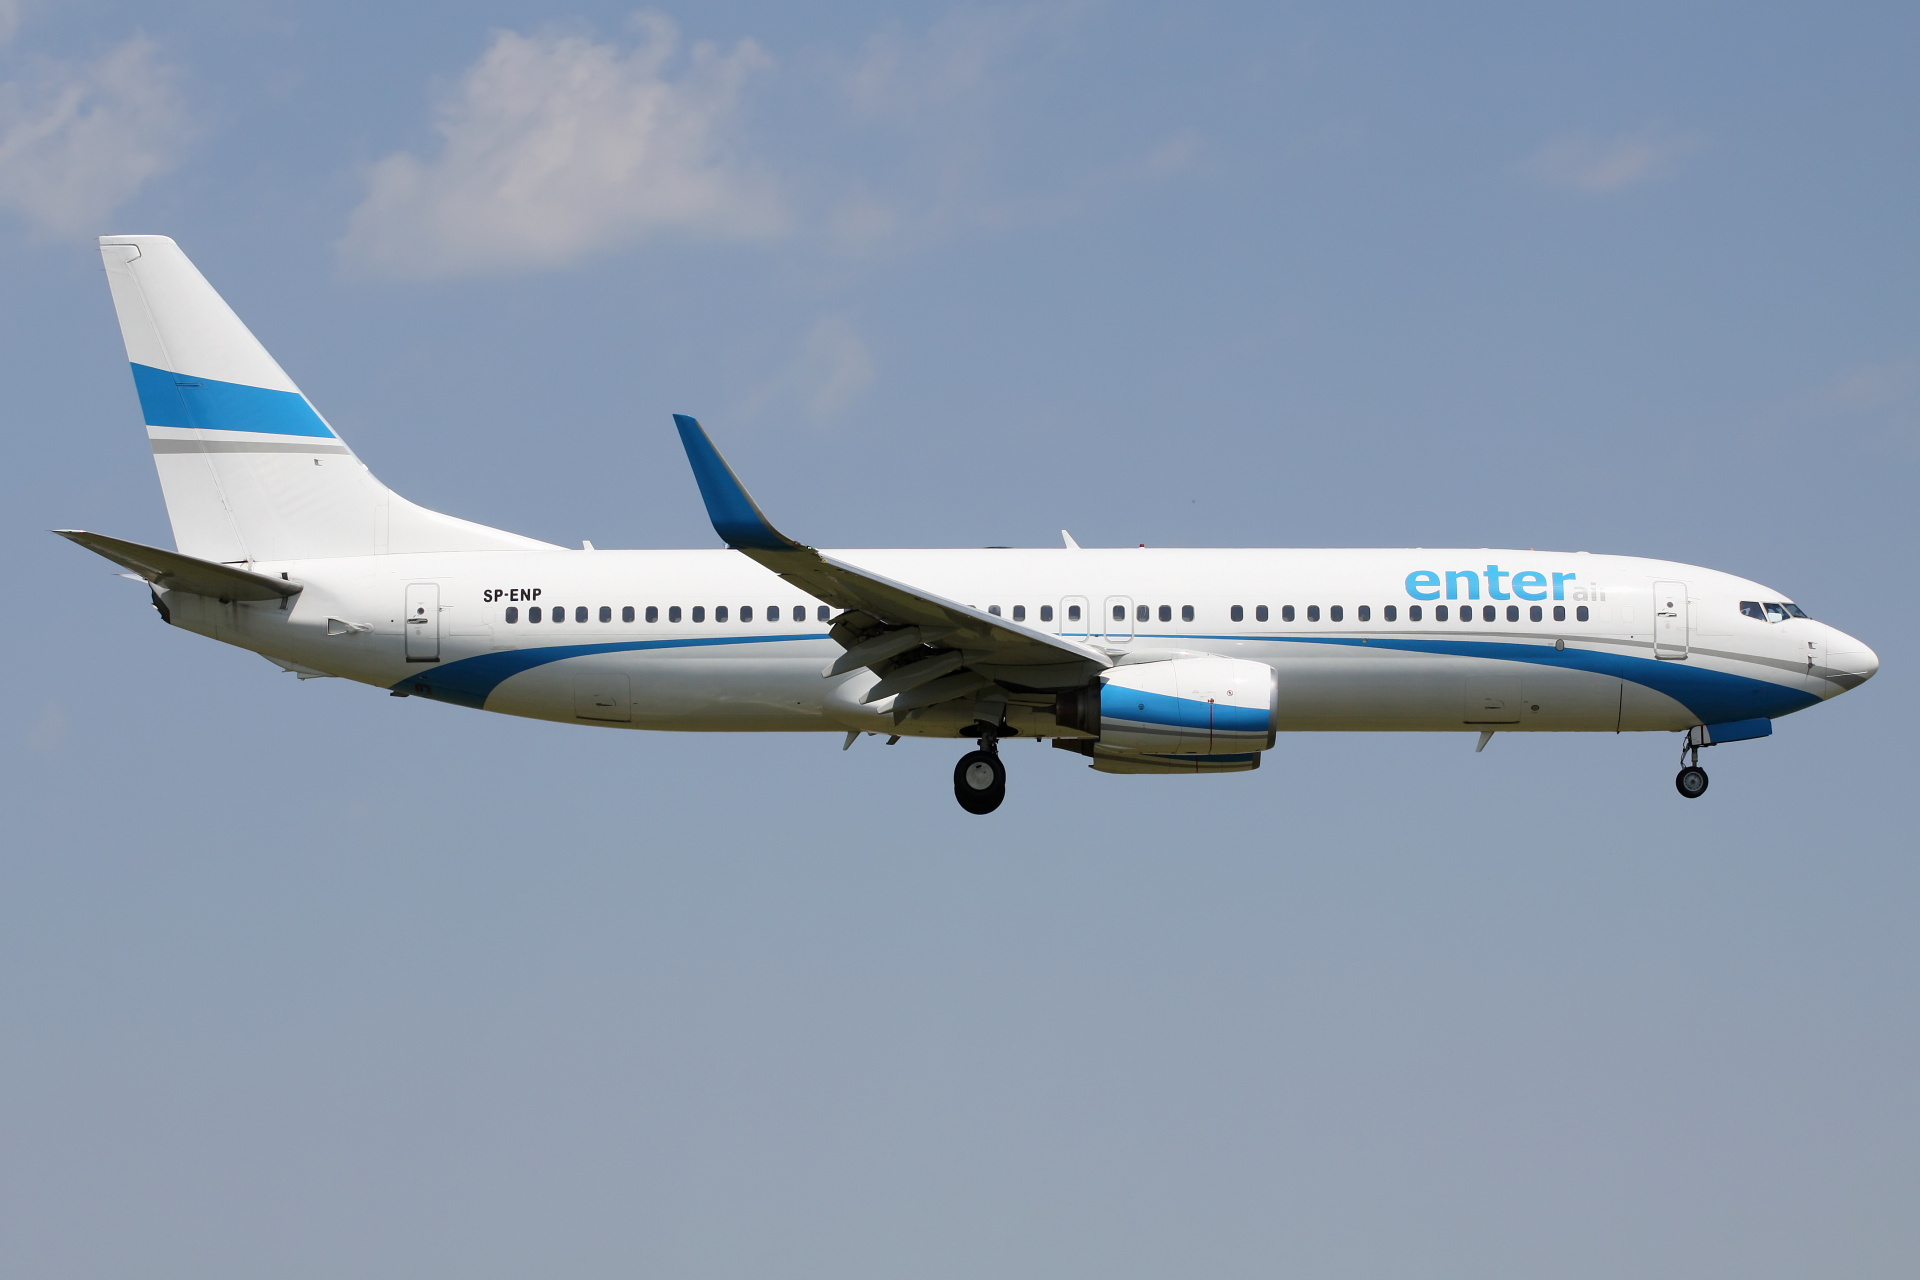 SP-ENP (Aircraft » EPWA Spotting » Boeing 737-800 » Enter Air)